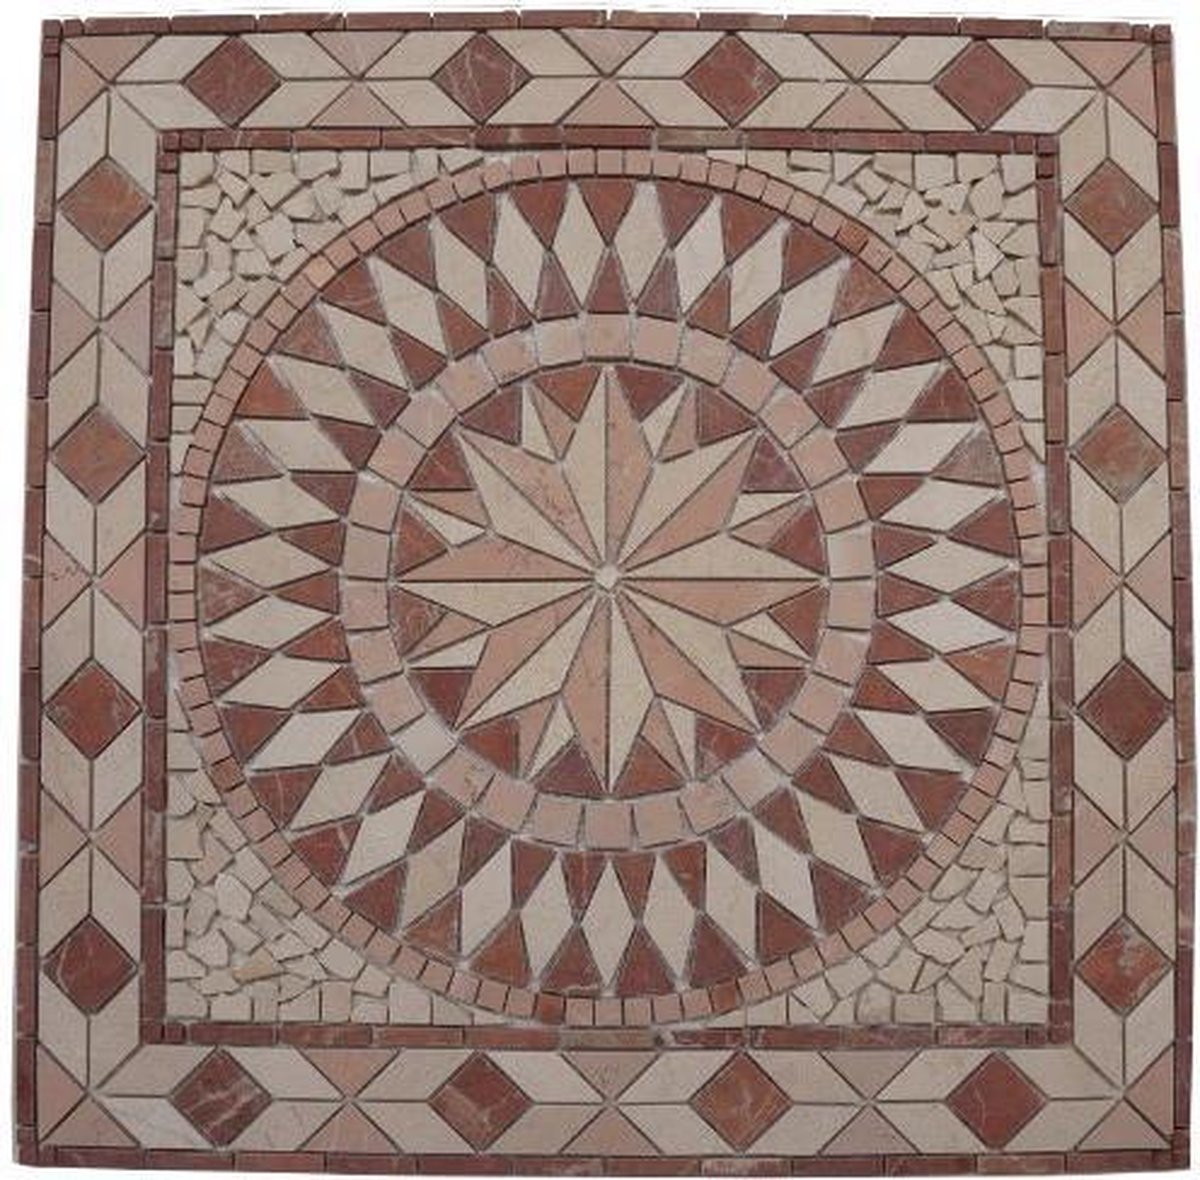 Tegel - Mozaiek medallion - 67 x 67 cm - rood beige/creme - 055 - Estile Mosaico